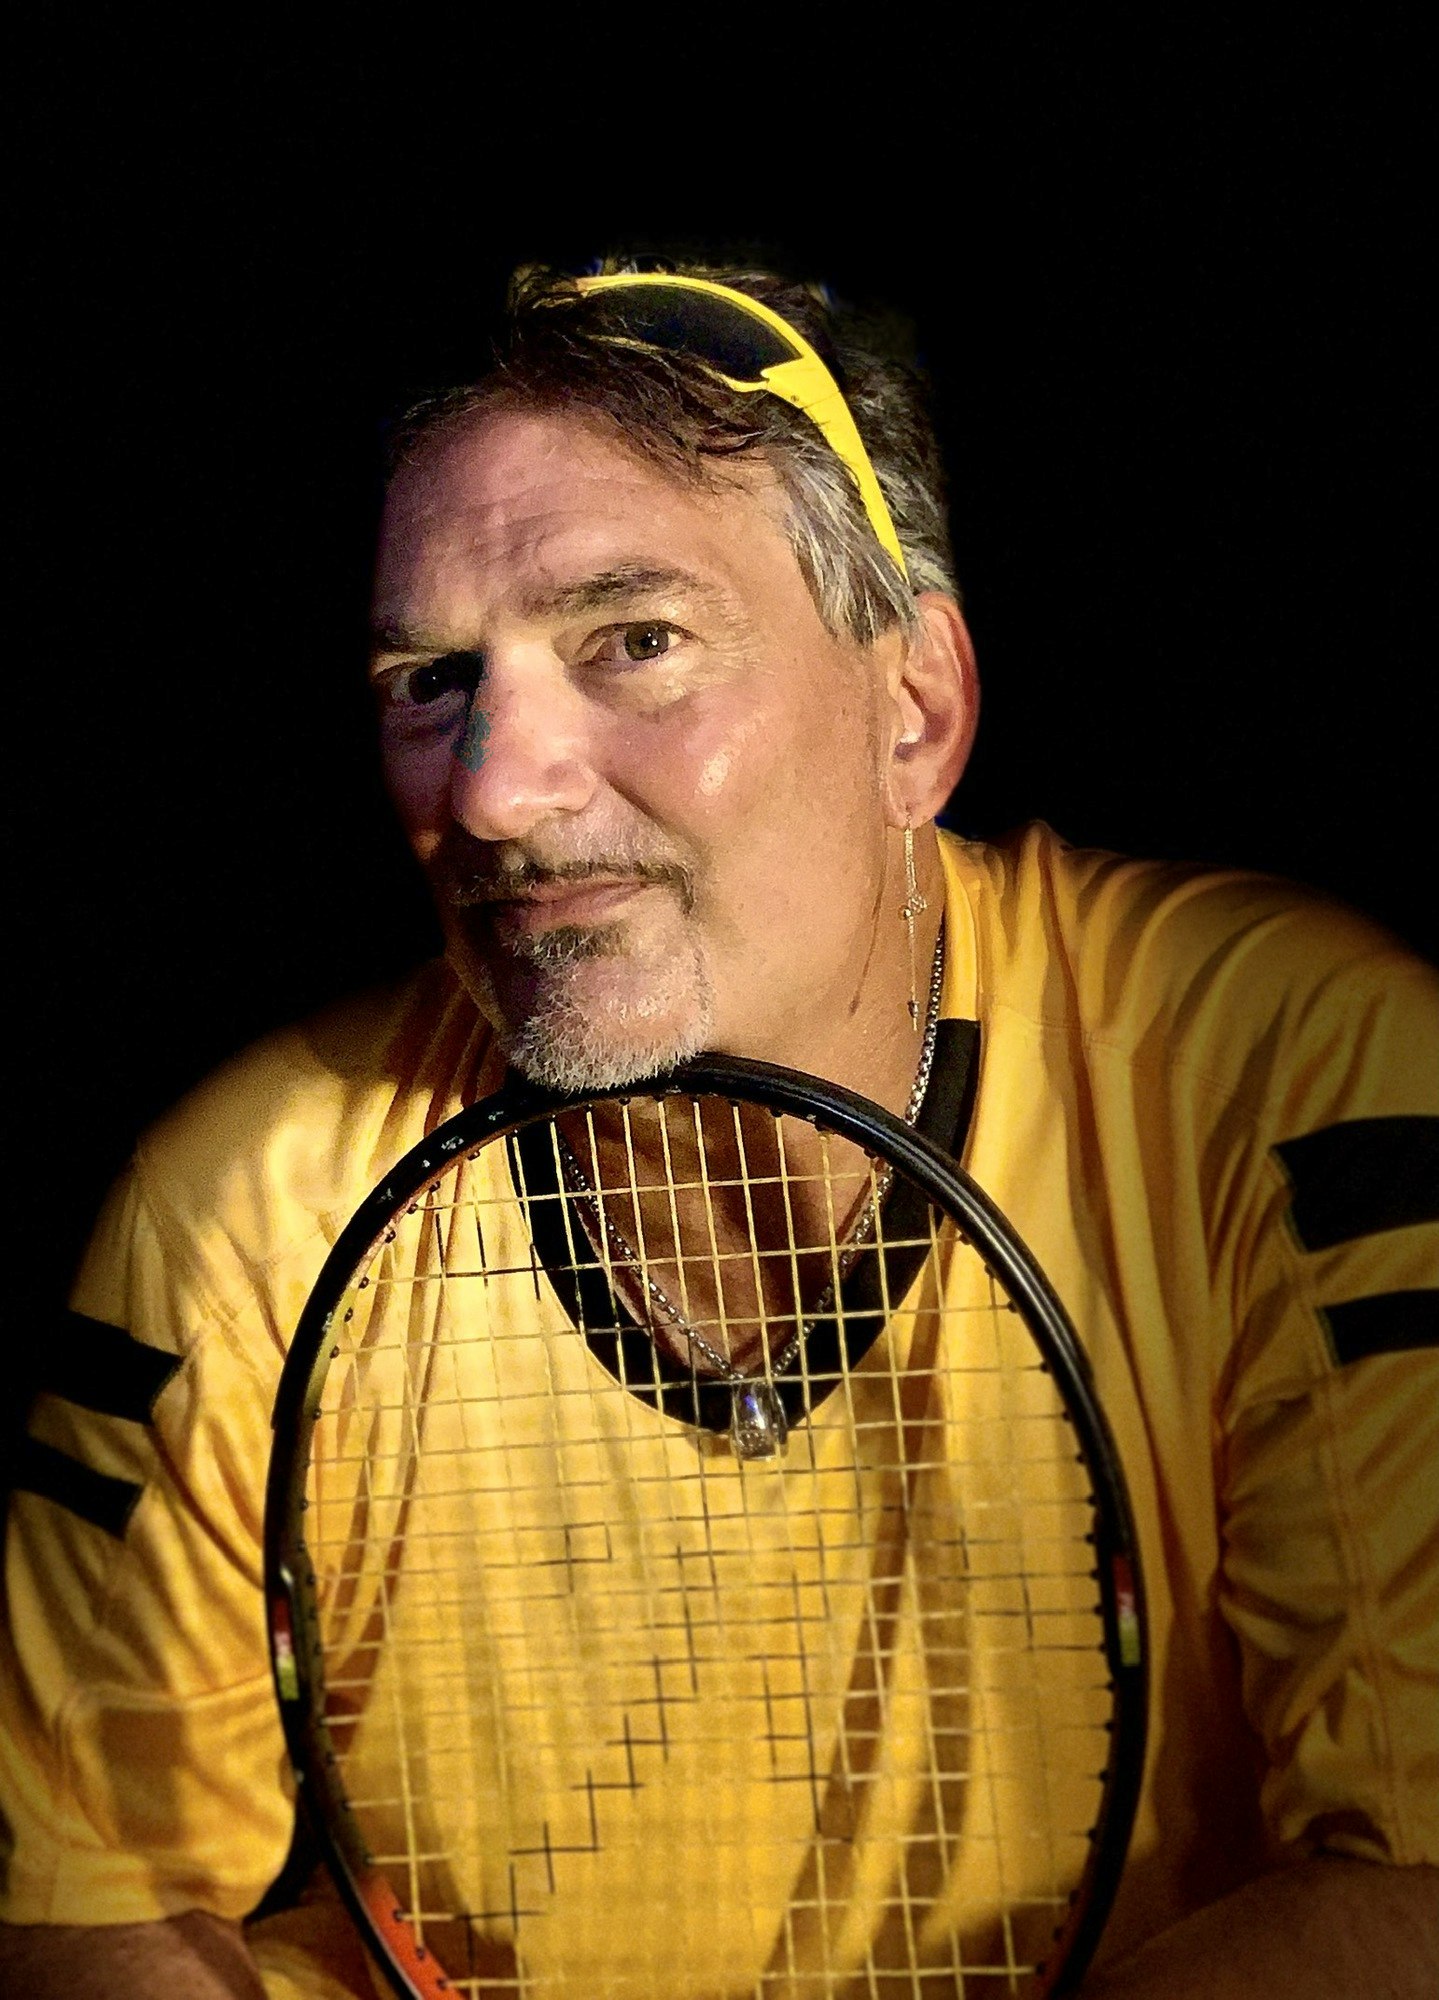 Tennis coach picture